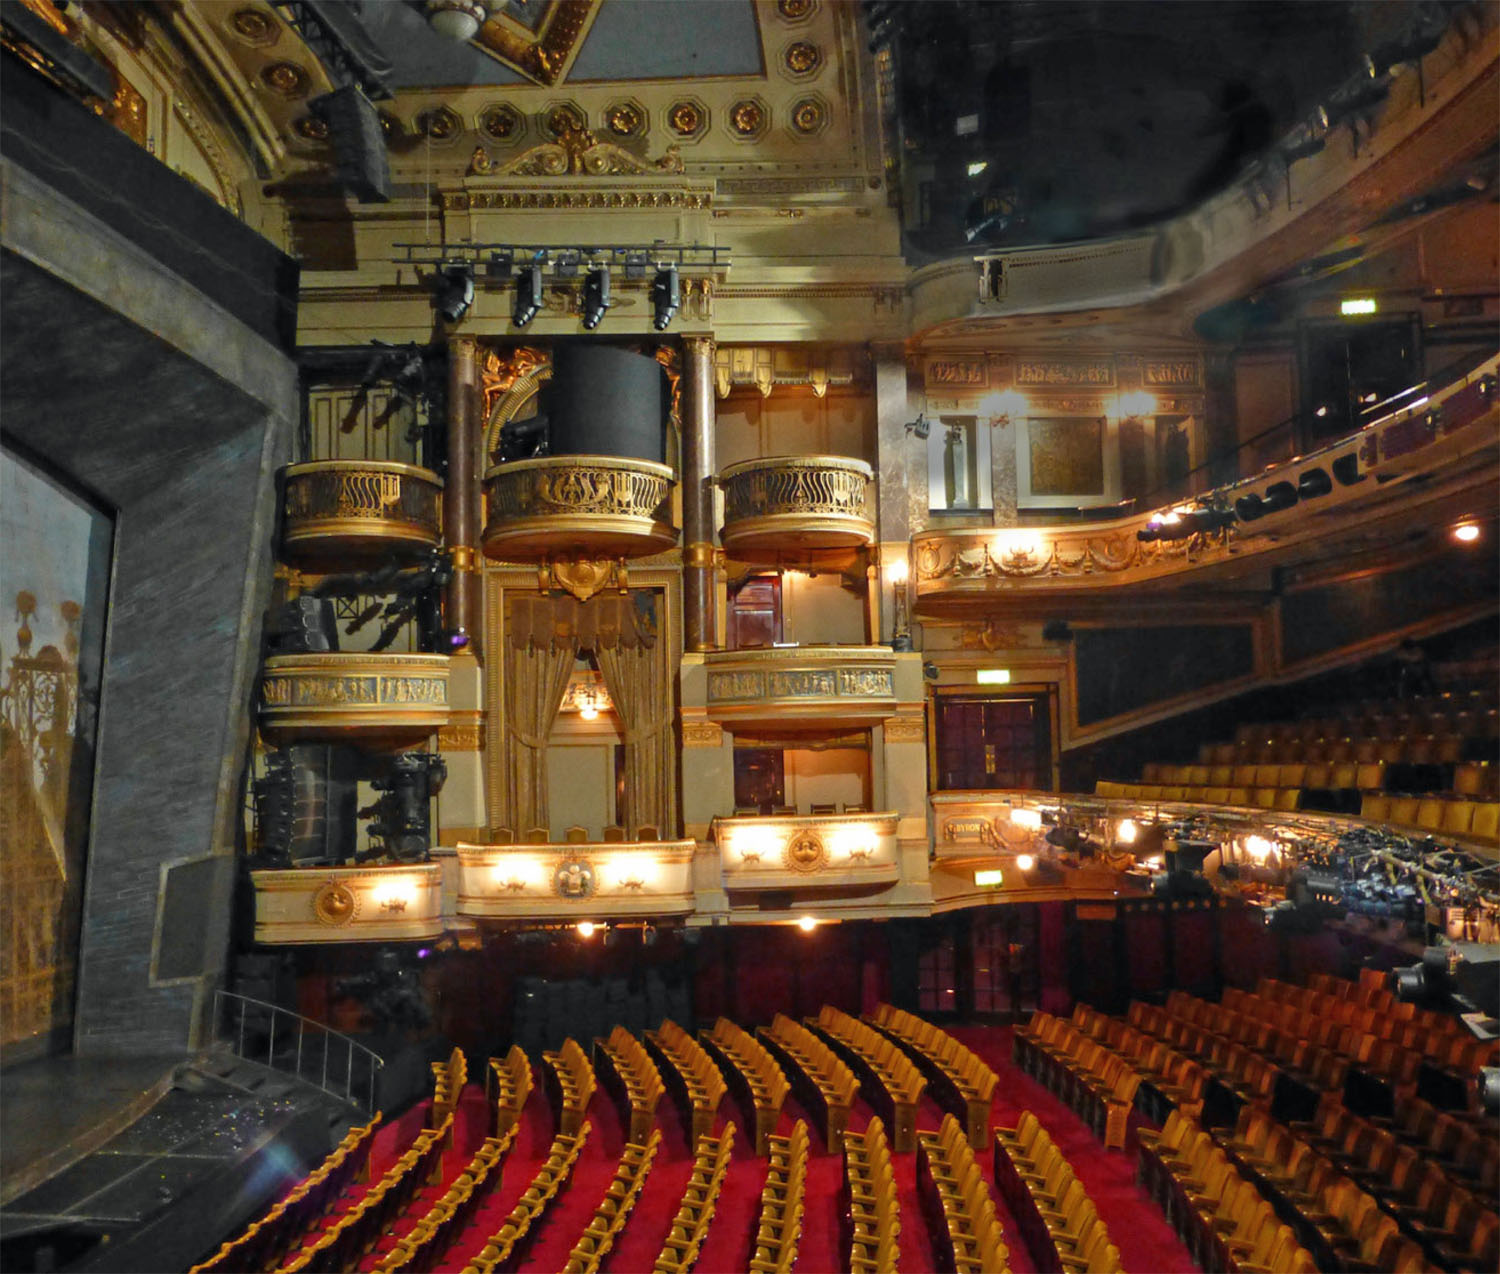 Theatre Royal, Drury Lane, London Historic Theatre Photography